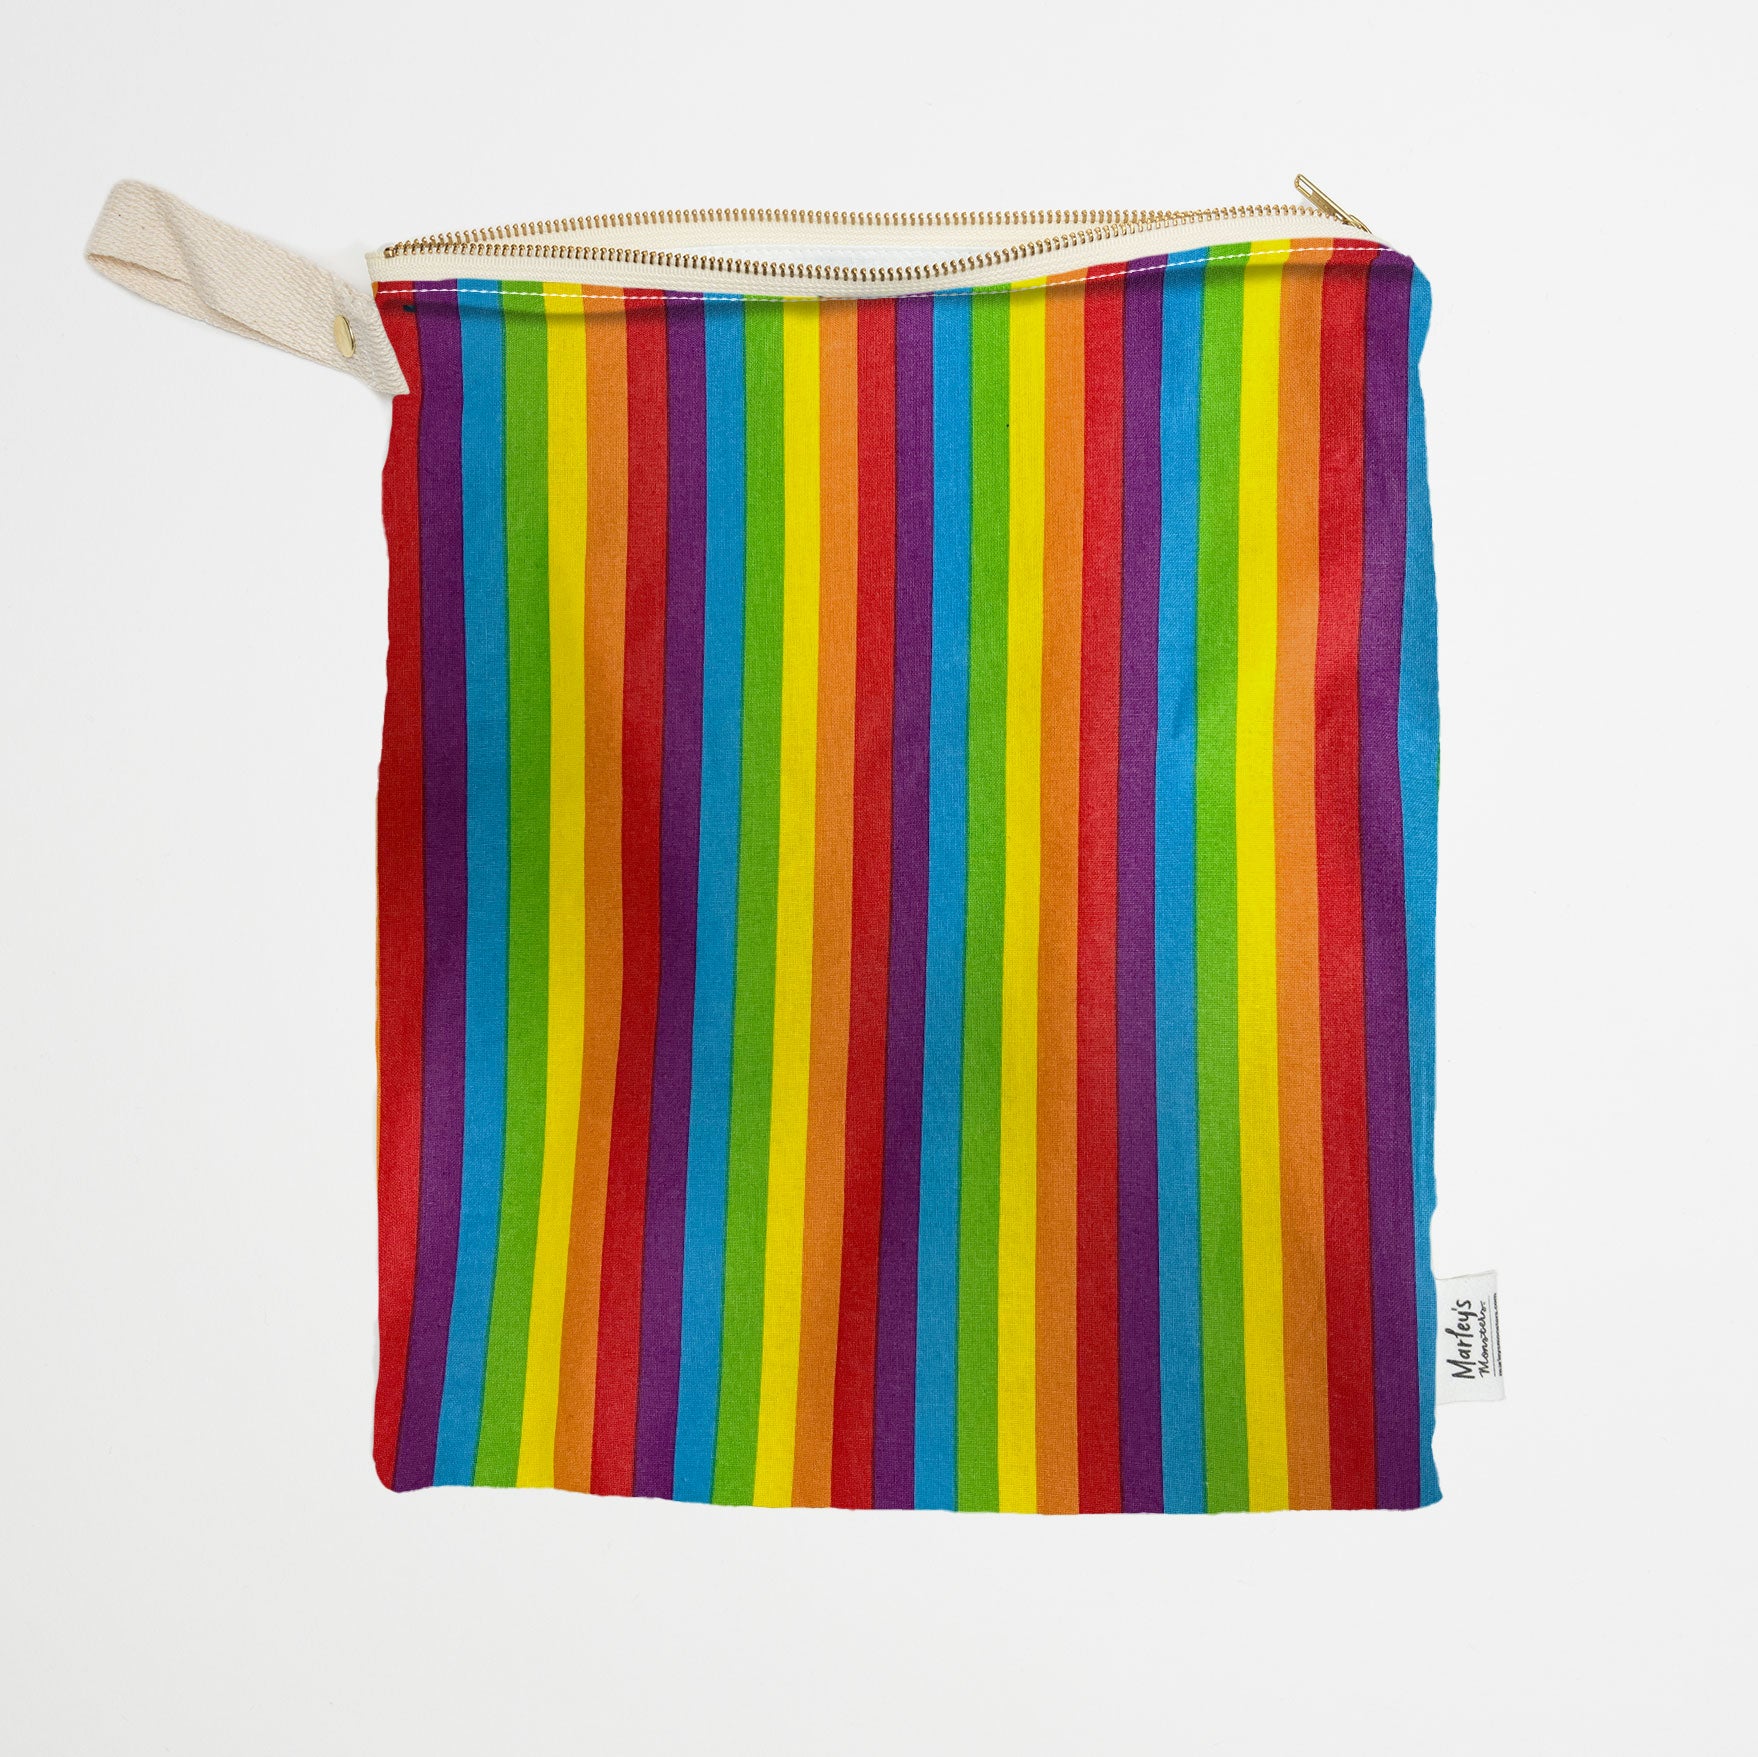 Wet Bag Kit: Pride Edition - 12 Count Roll of UNpaper® Towels + Wet Bag